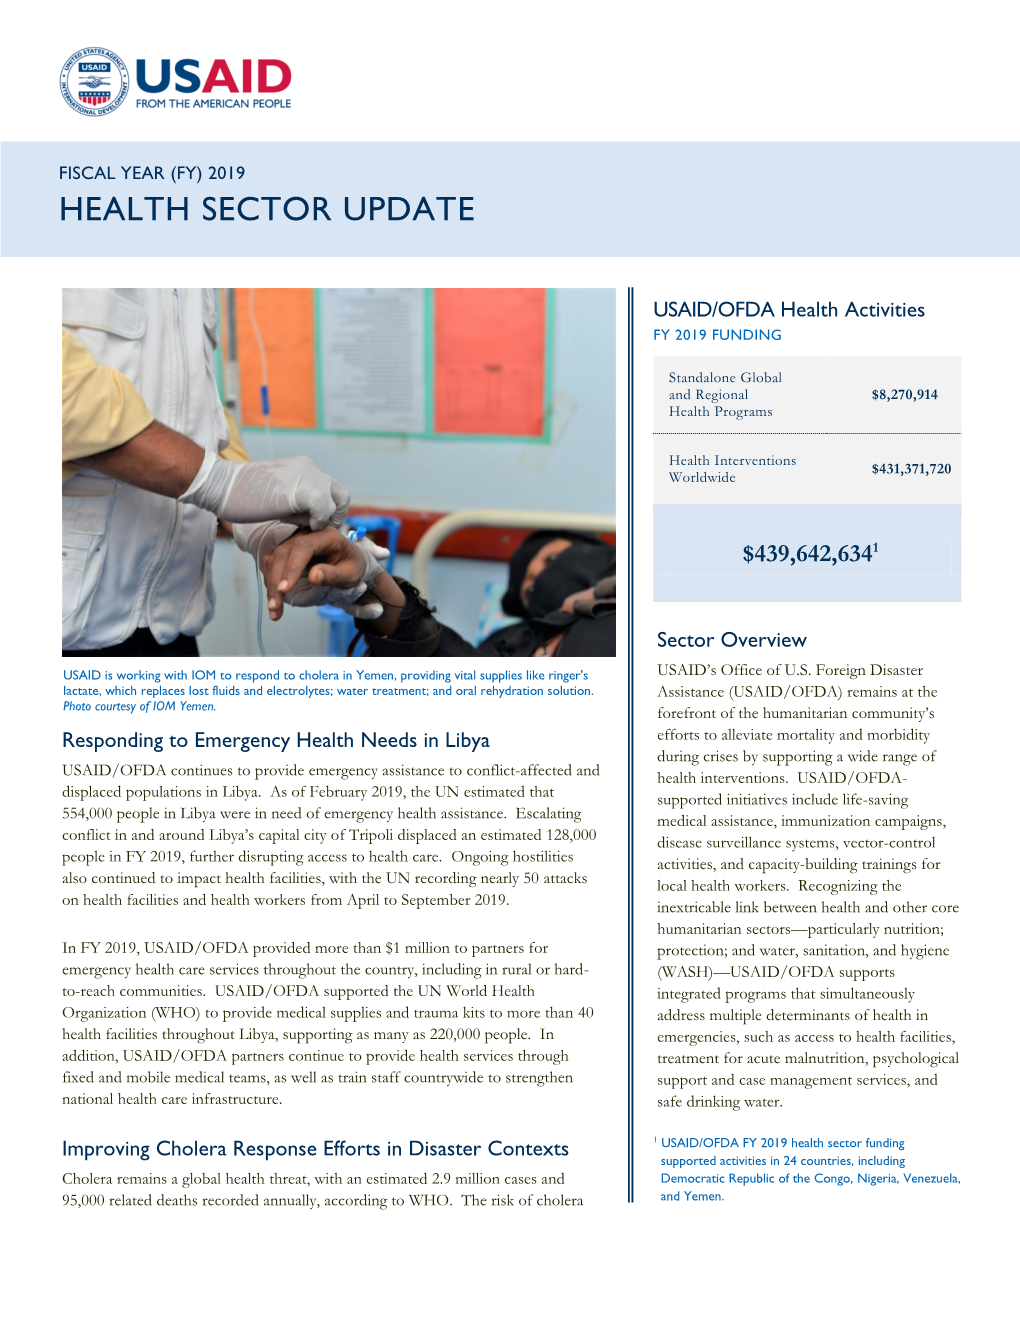 USAID-OFDA Health Sector Update